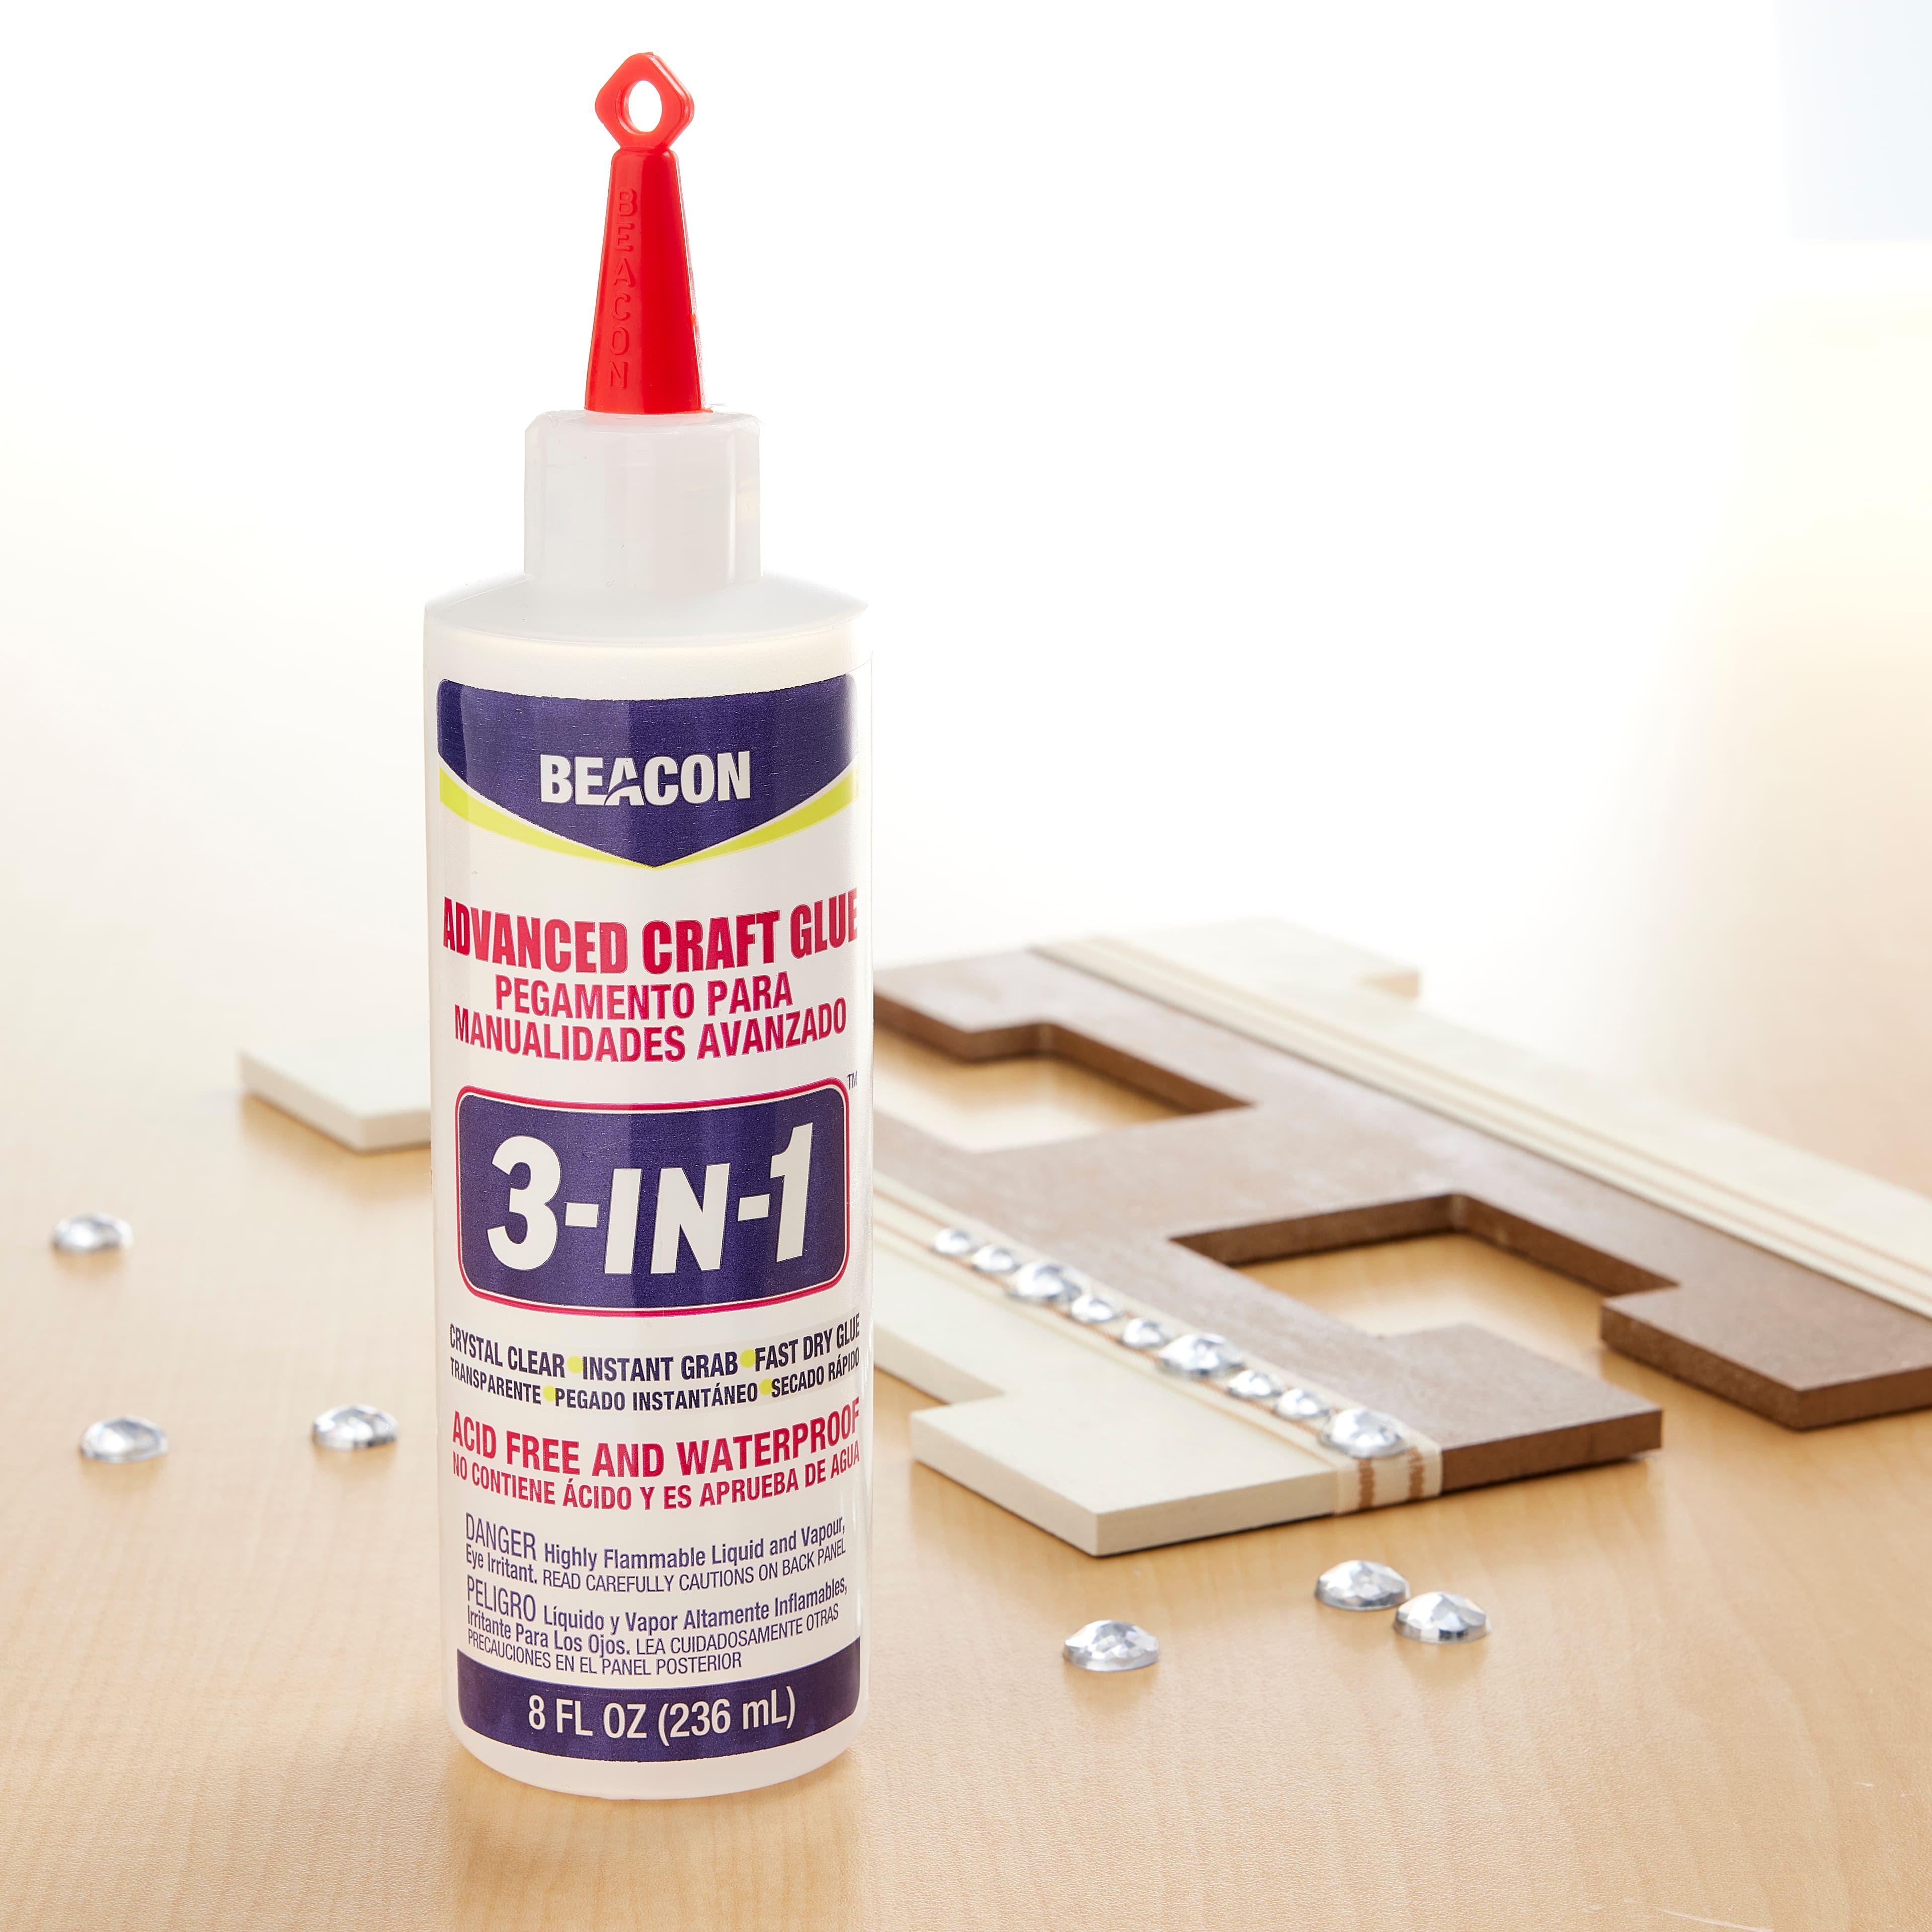 Beacon 8oz. 3-in-1 Advanced Craft Glue